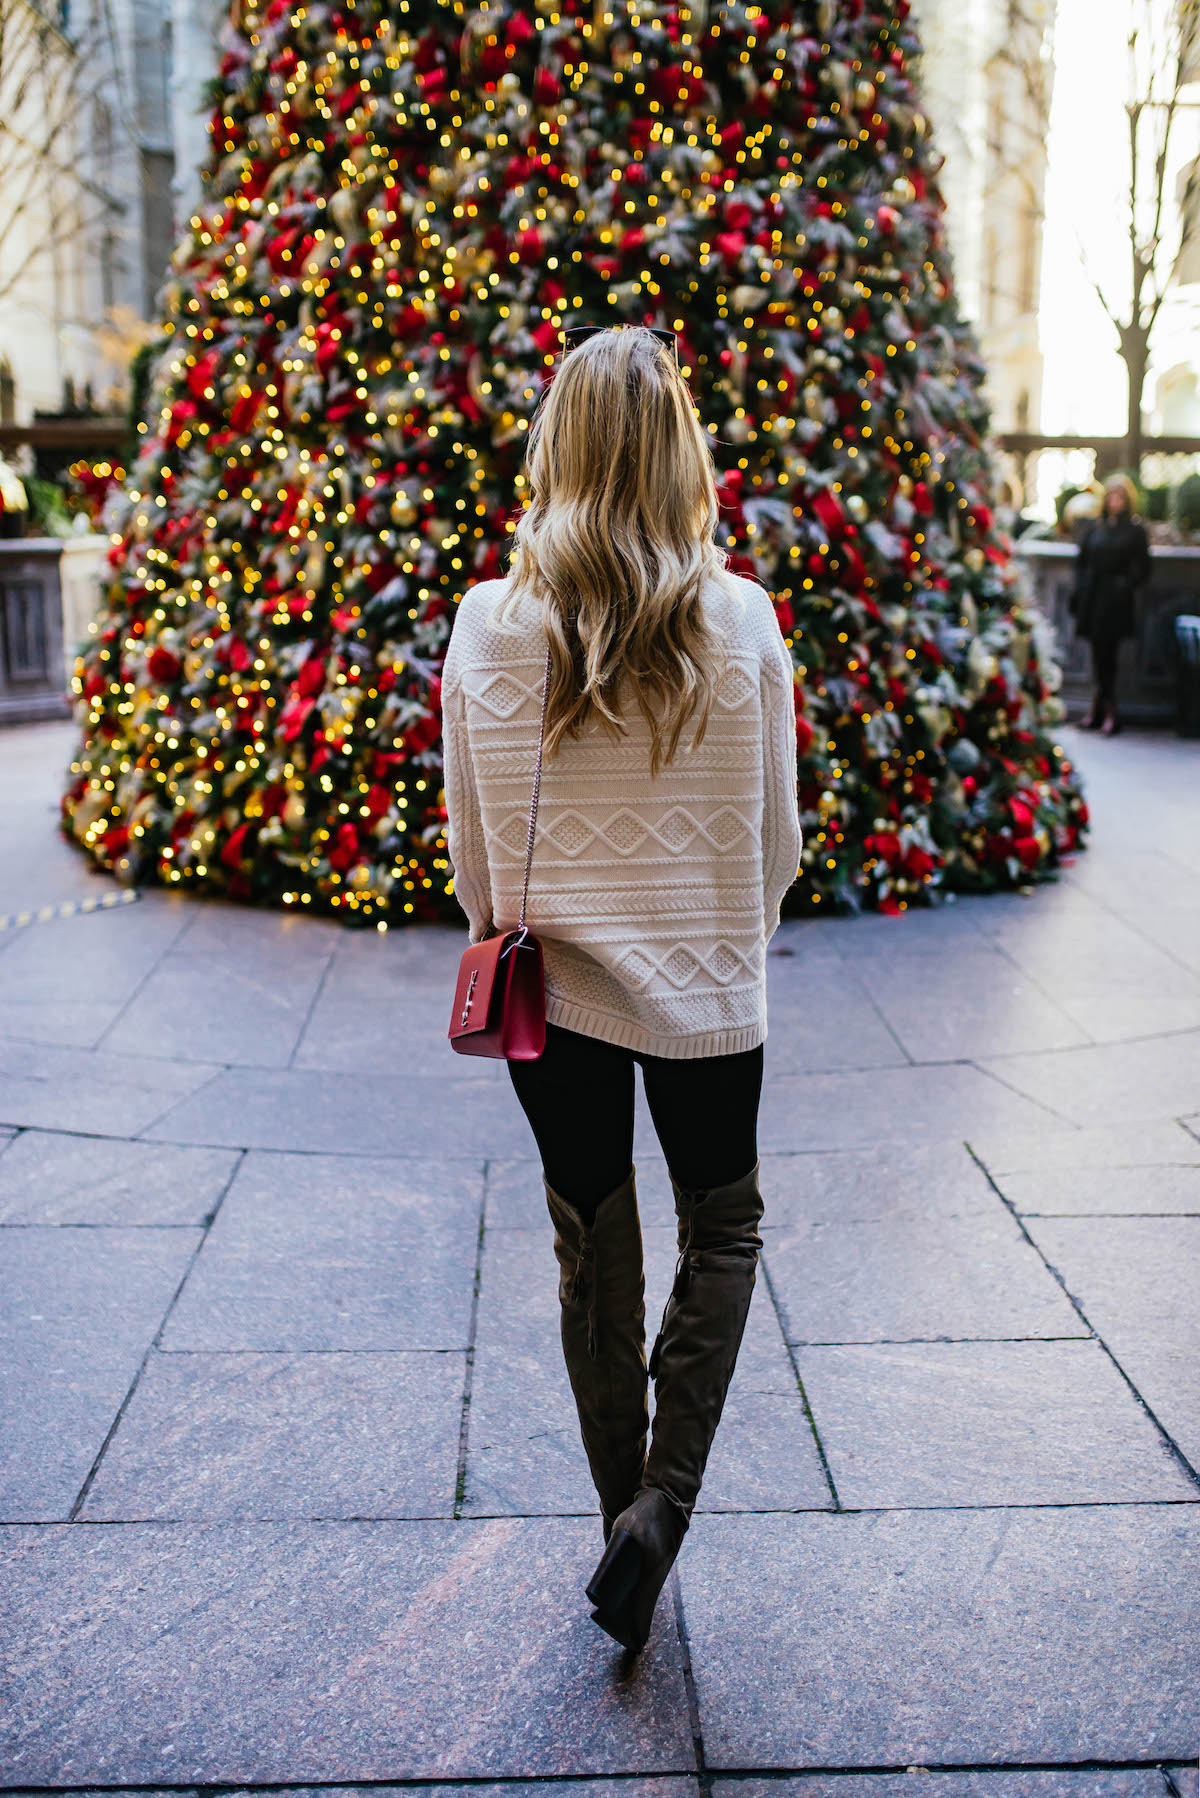 Lotte New York Palace Hotel Christmas Tree